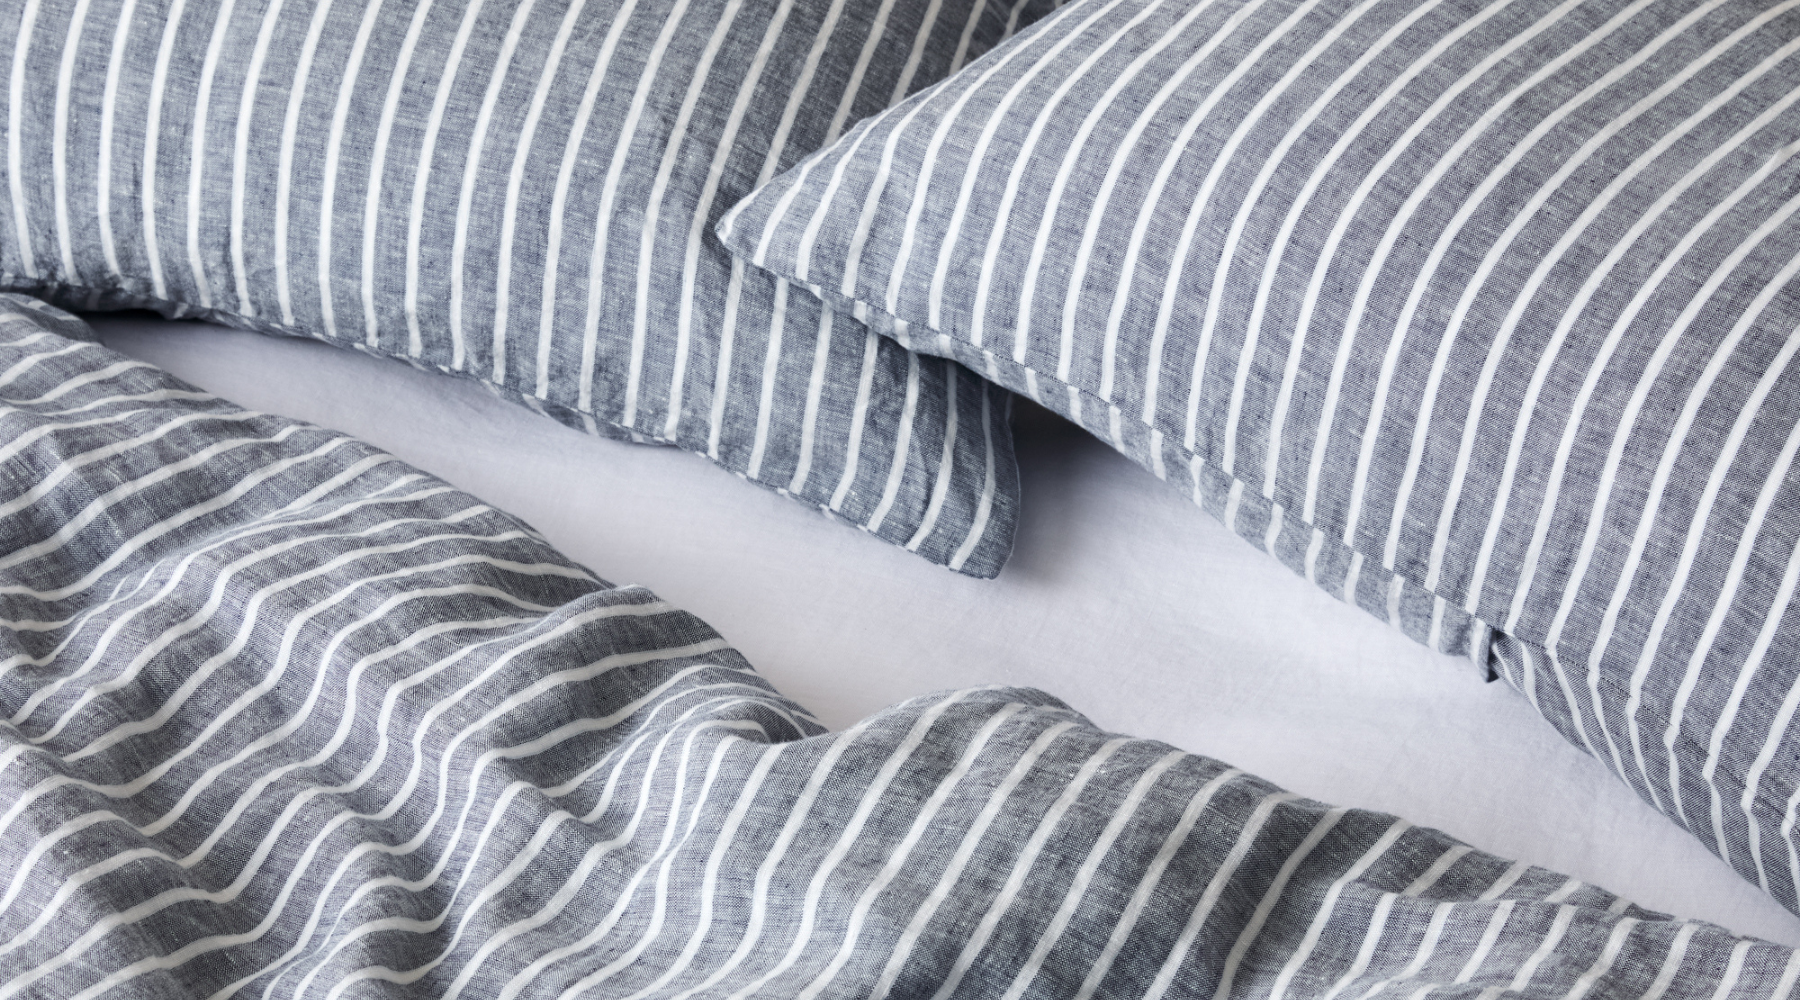 Introducing: Linen in Stripe